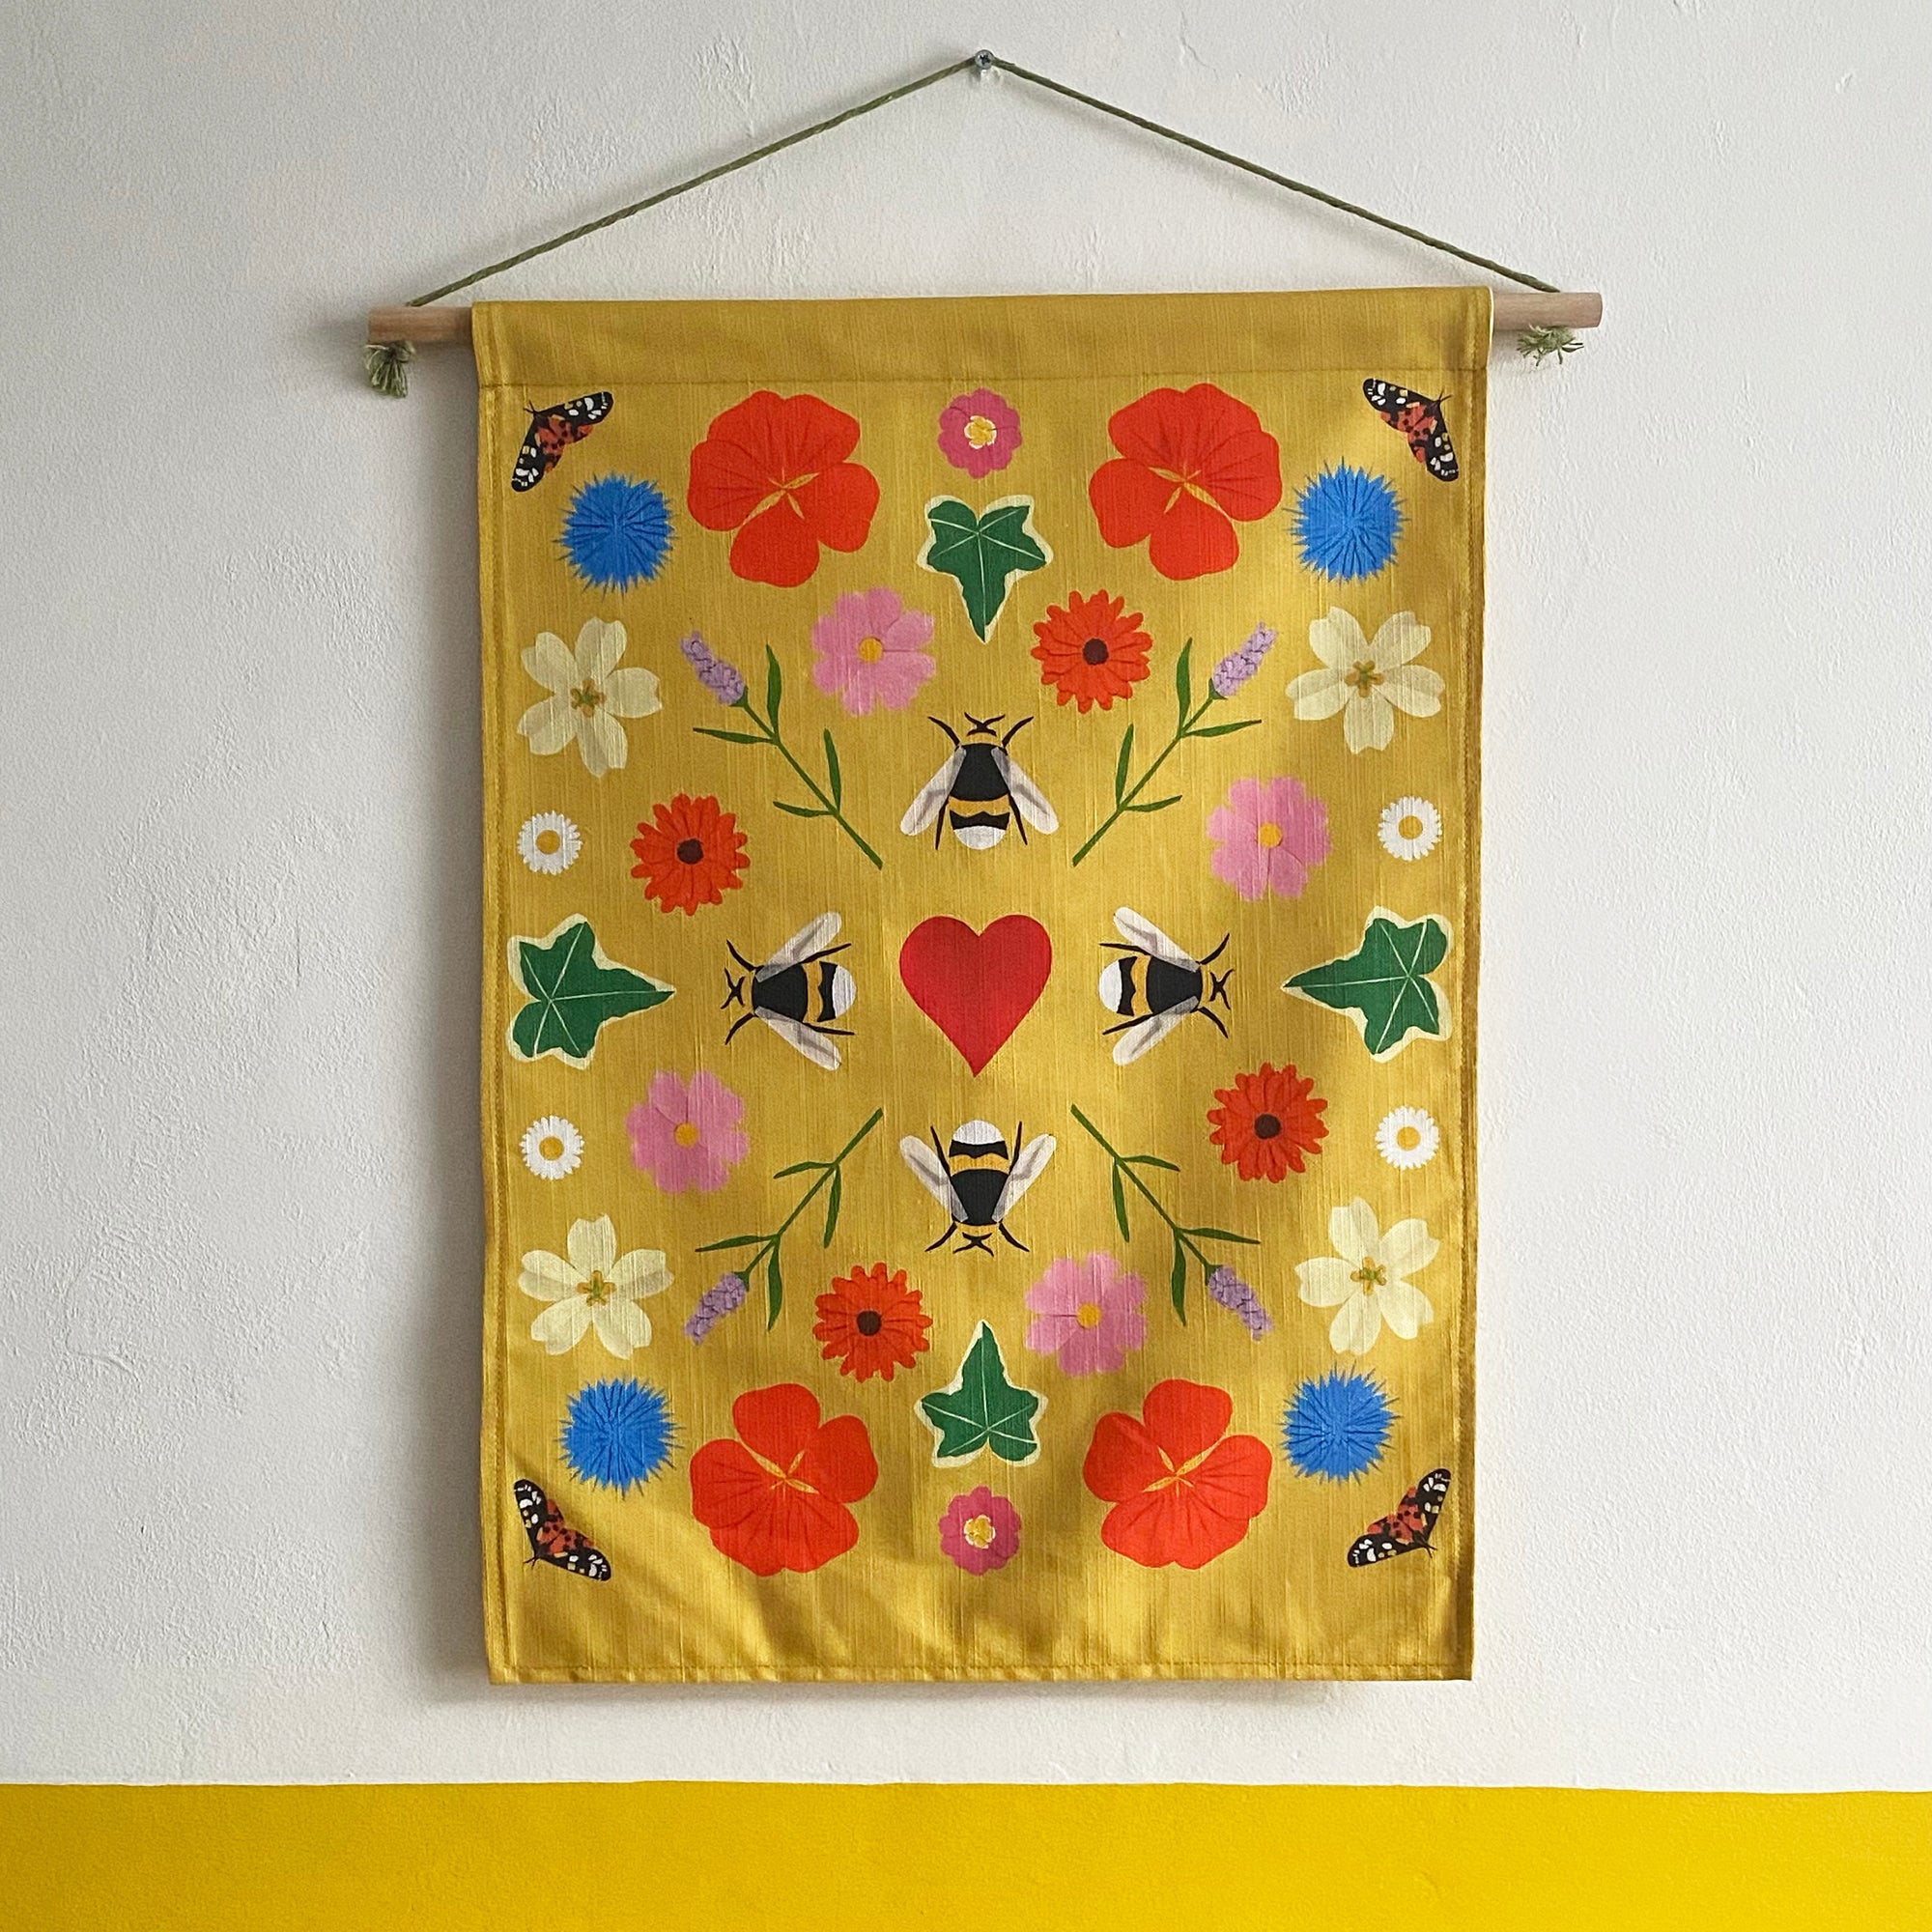 'Wild at heart' fabric wall hanging